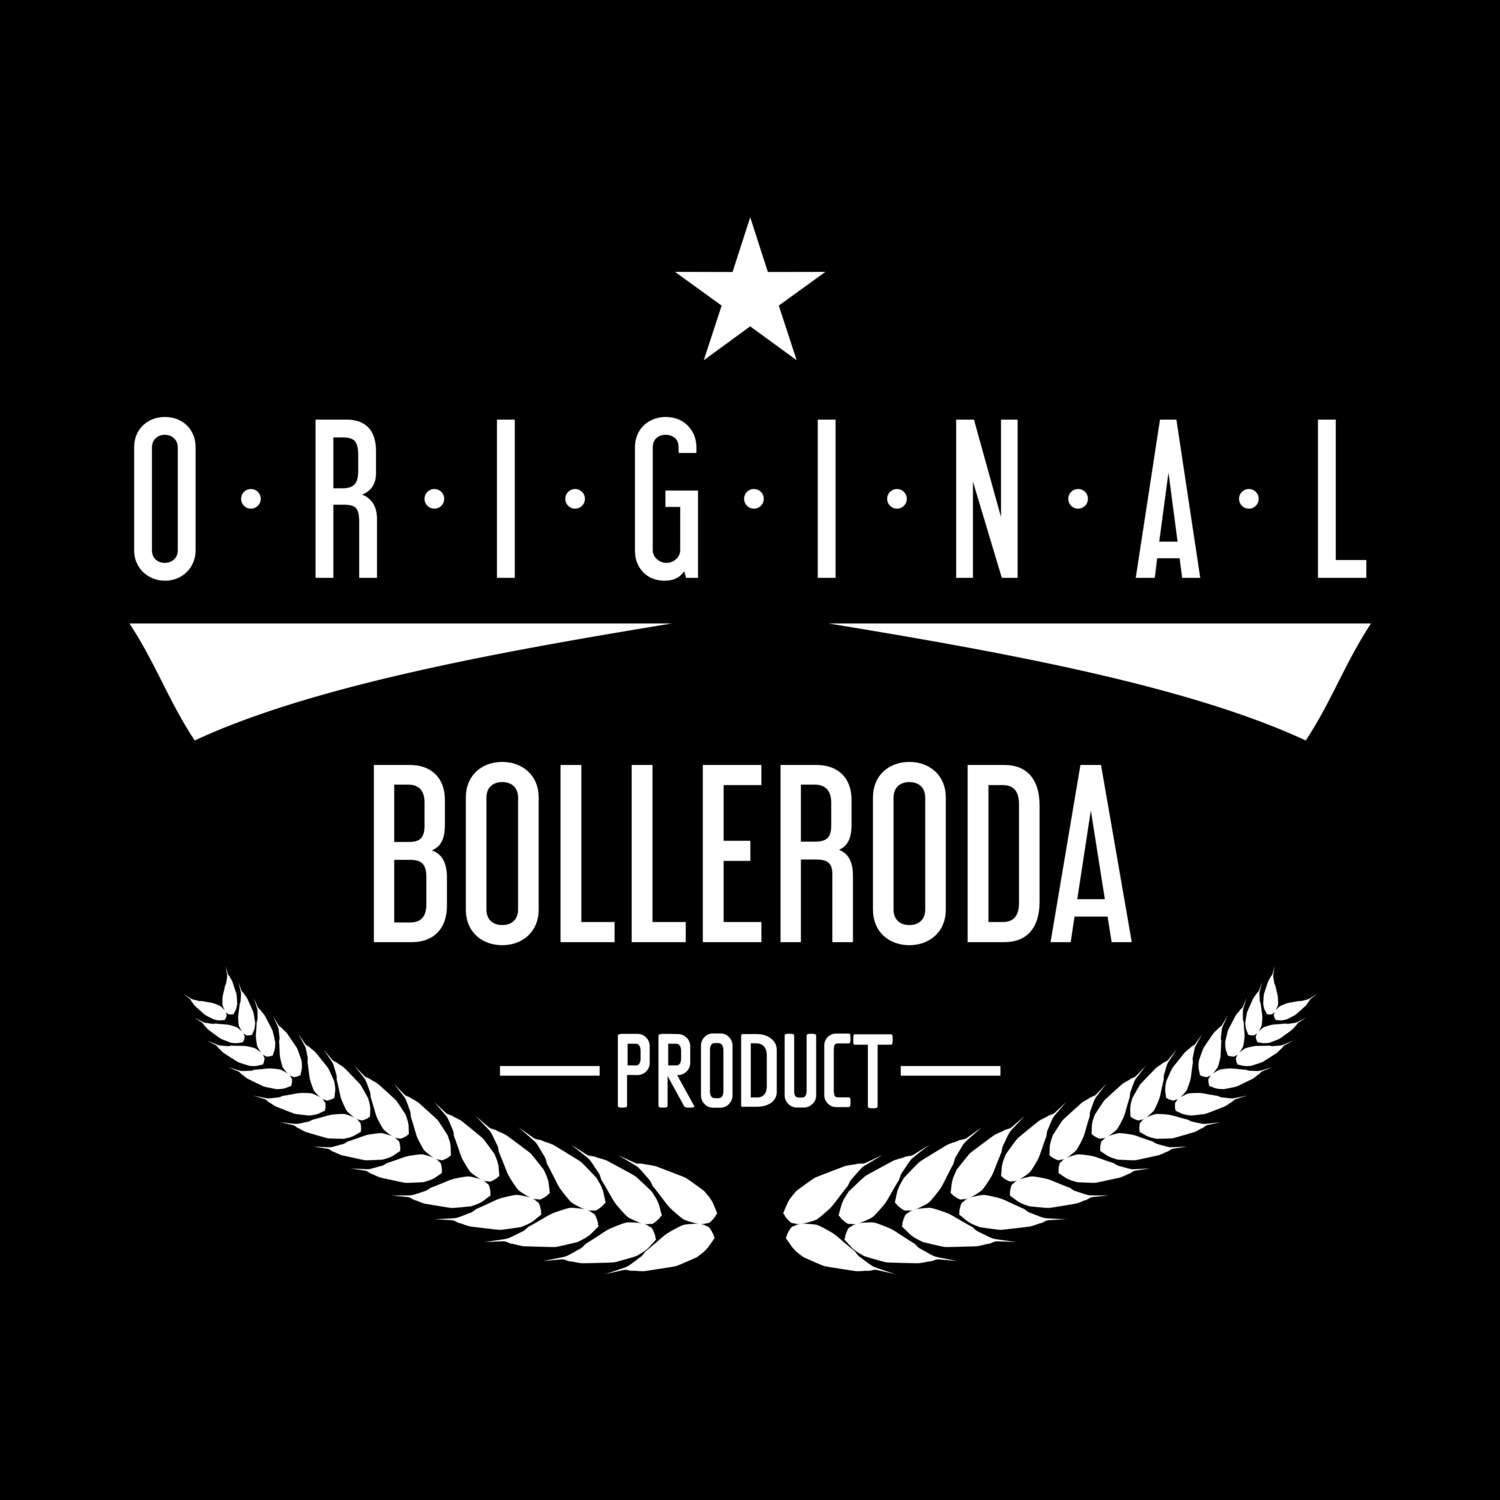 Bolleroda T-Shirt »Original Product«